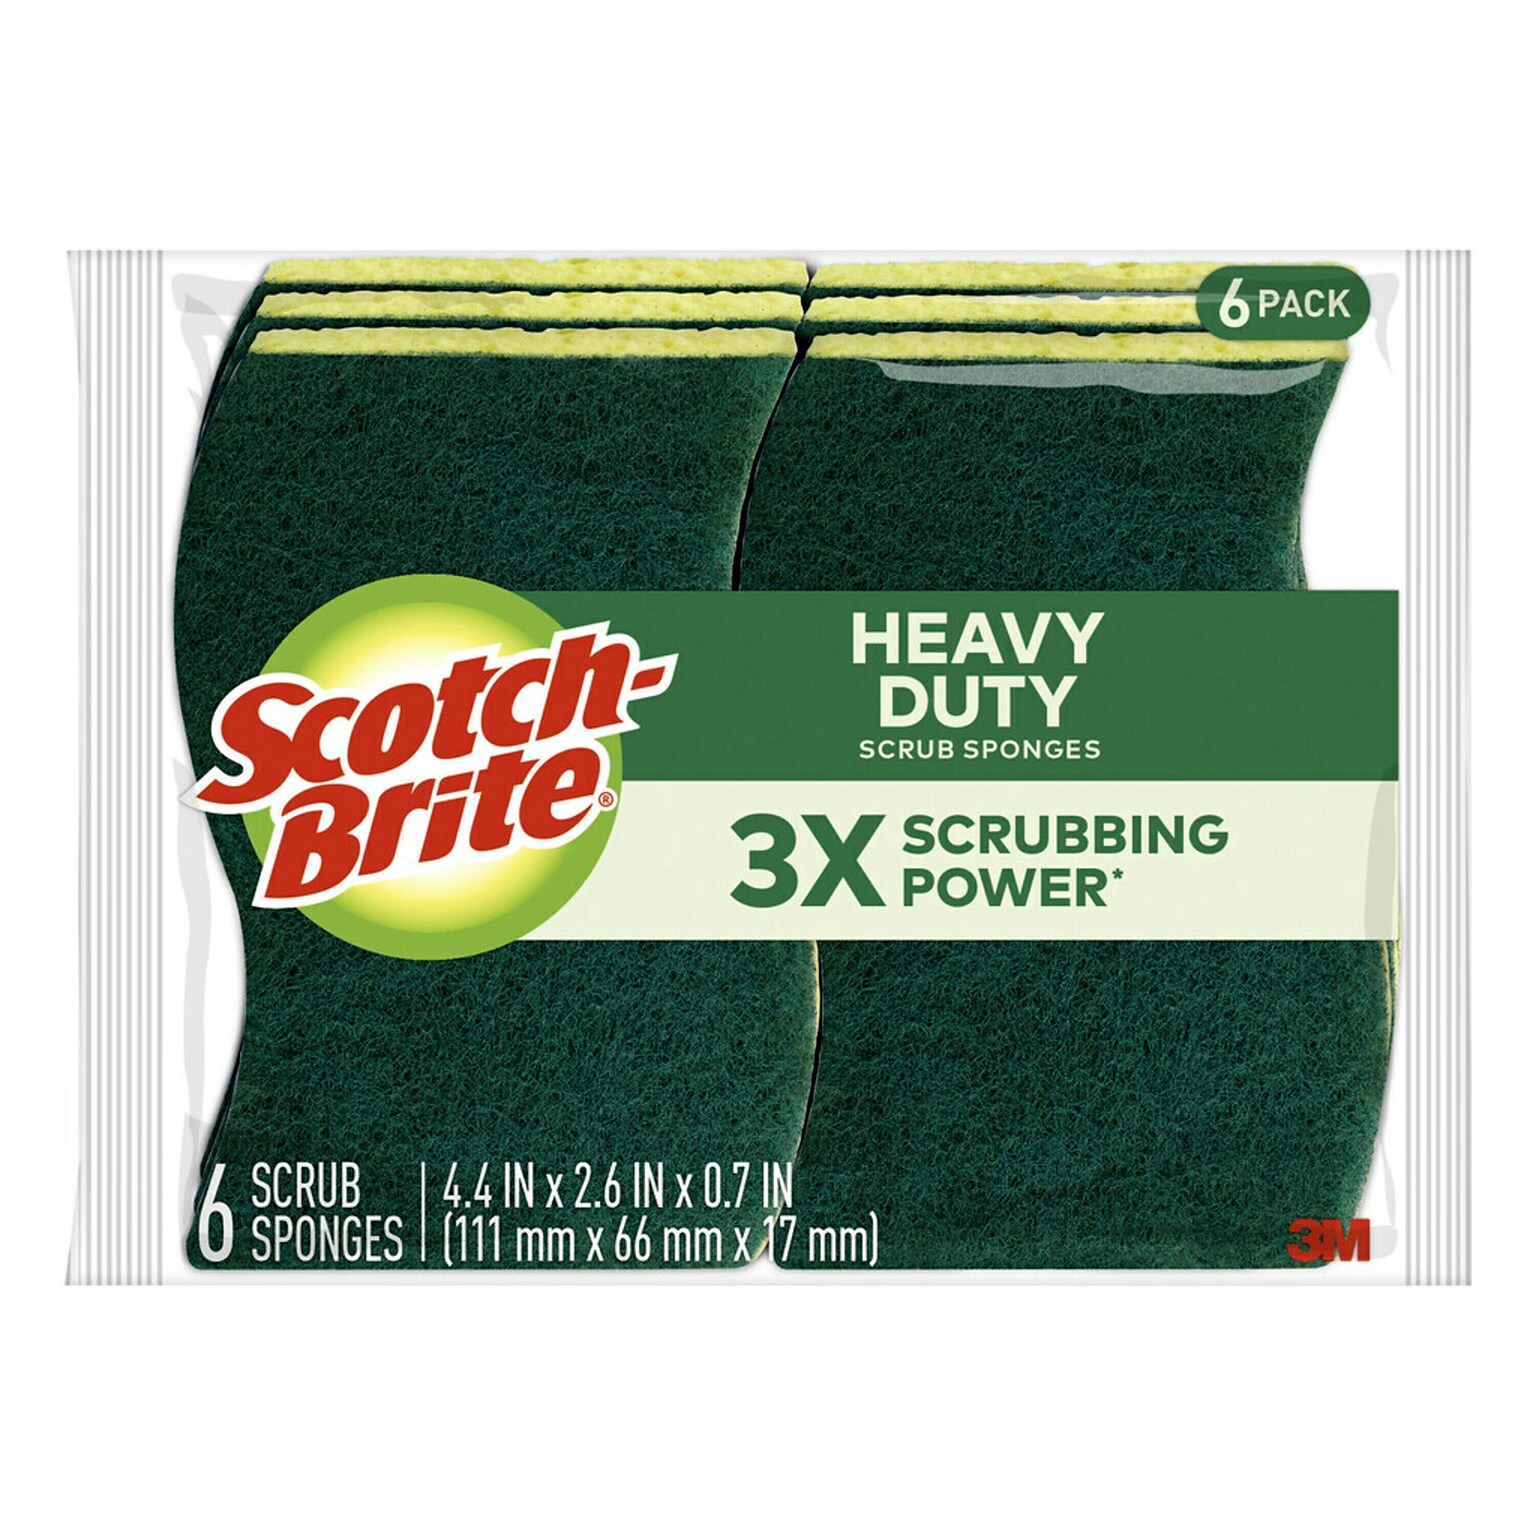 Scotch-Brite Heavy Duty Scrub Sponges, Green/Yellow, 6/Pack (426)